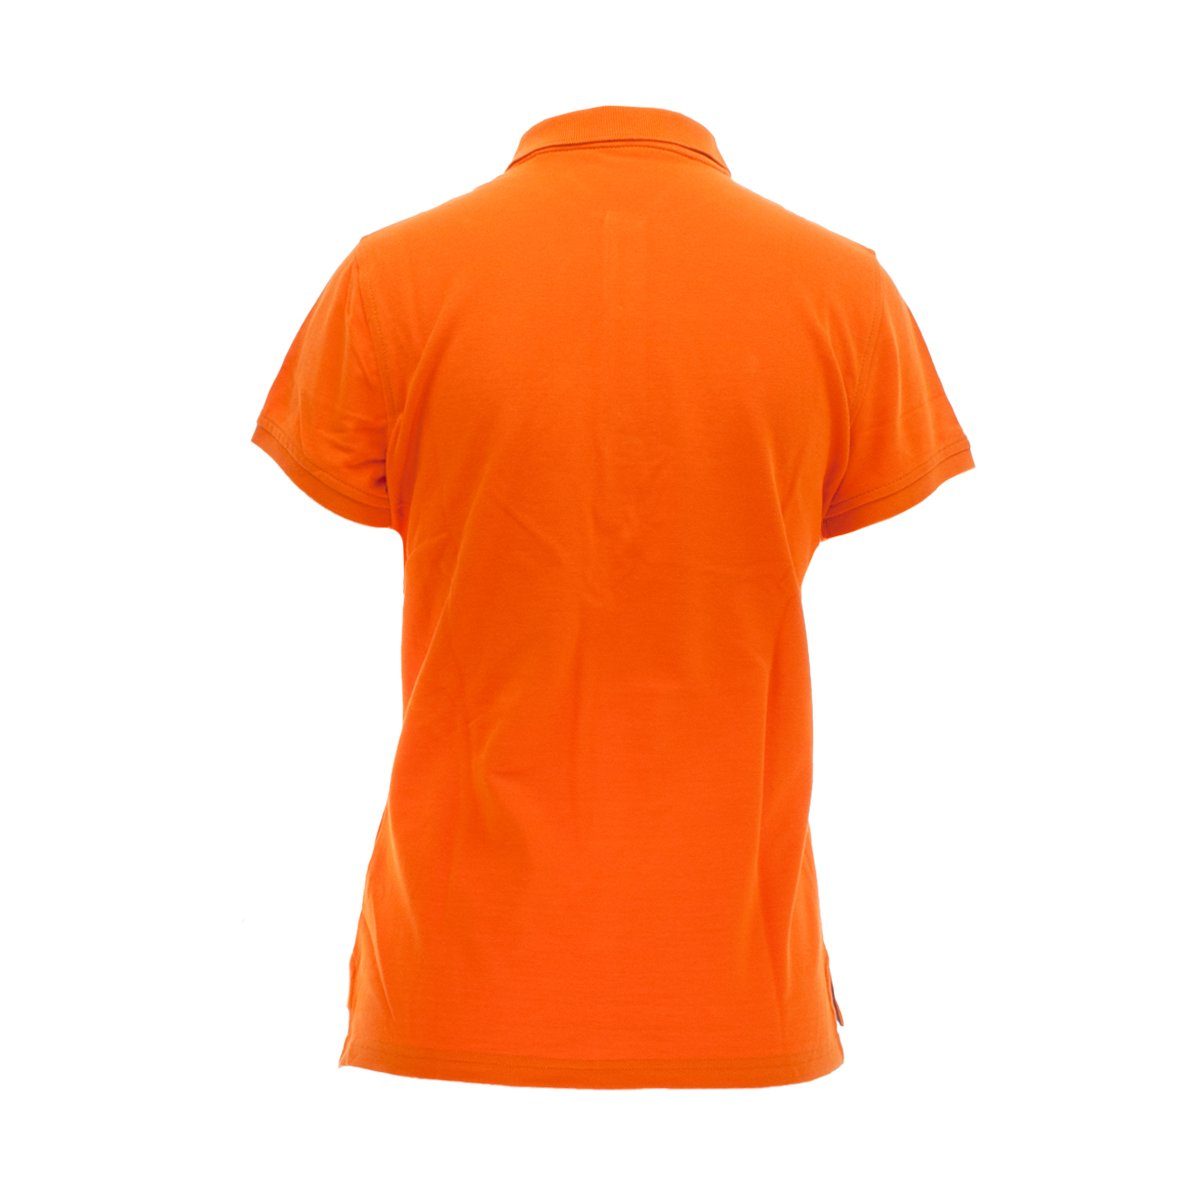 Damen Russet-Orange(806) Kurzarmshirt 409504 Gant Poloshirt